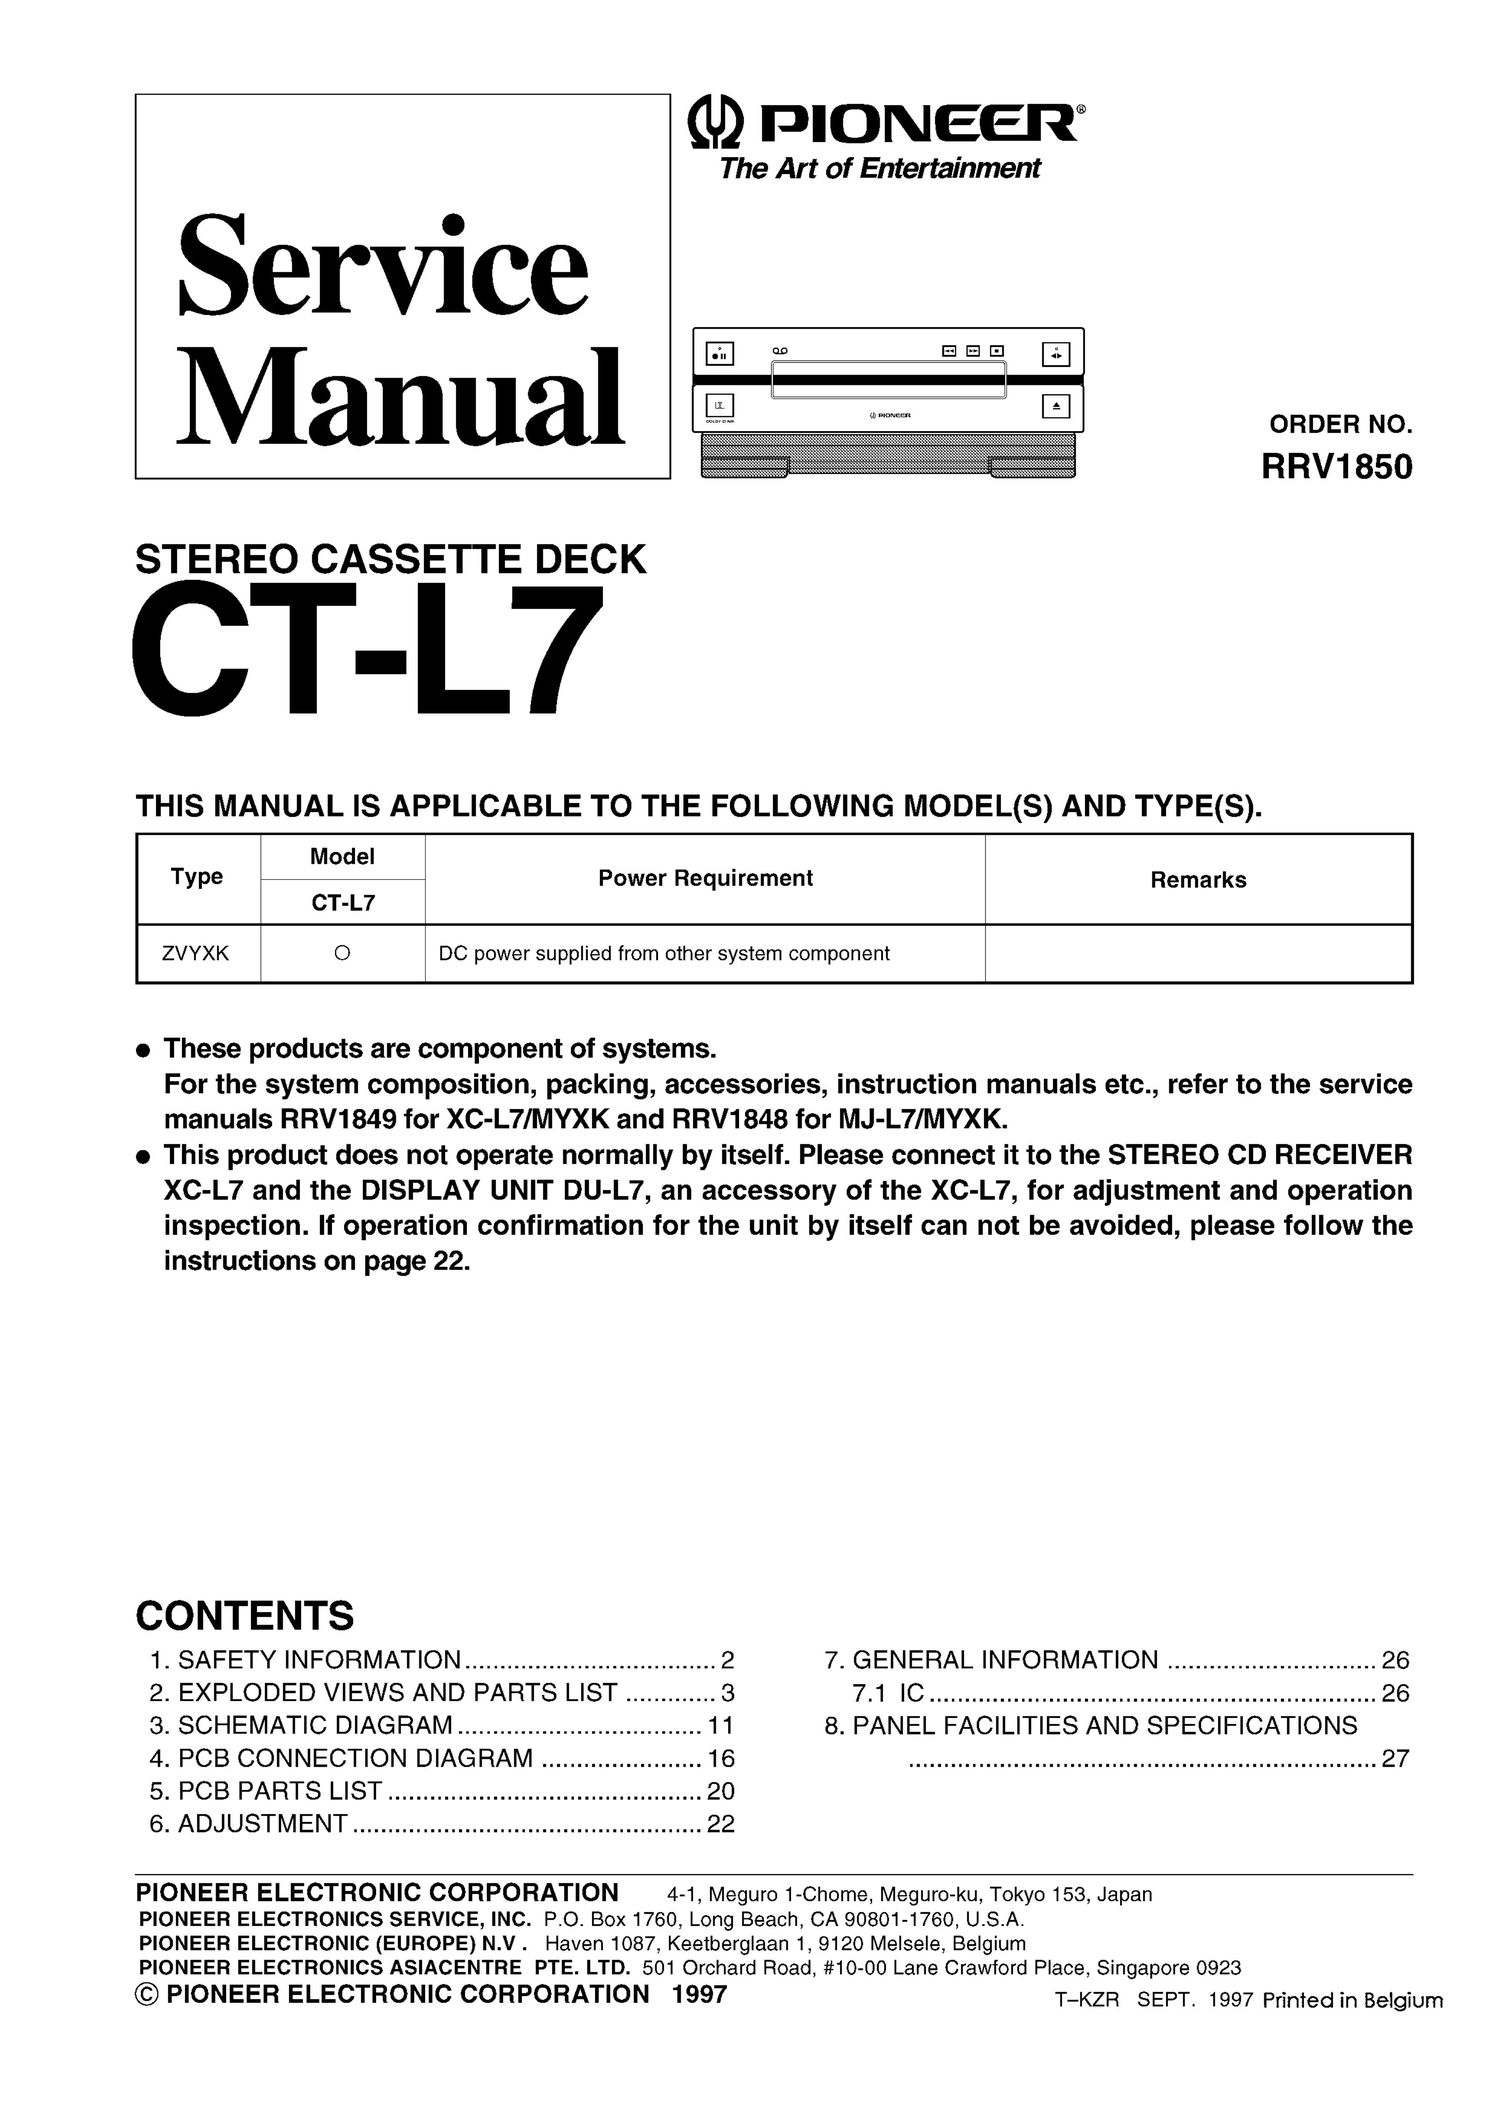 pioneer ctl 7 service manual